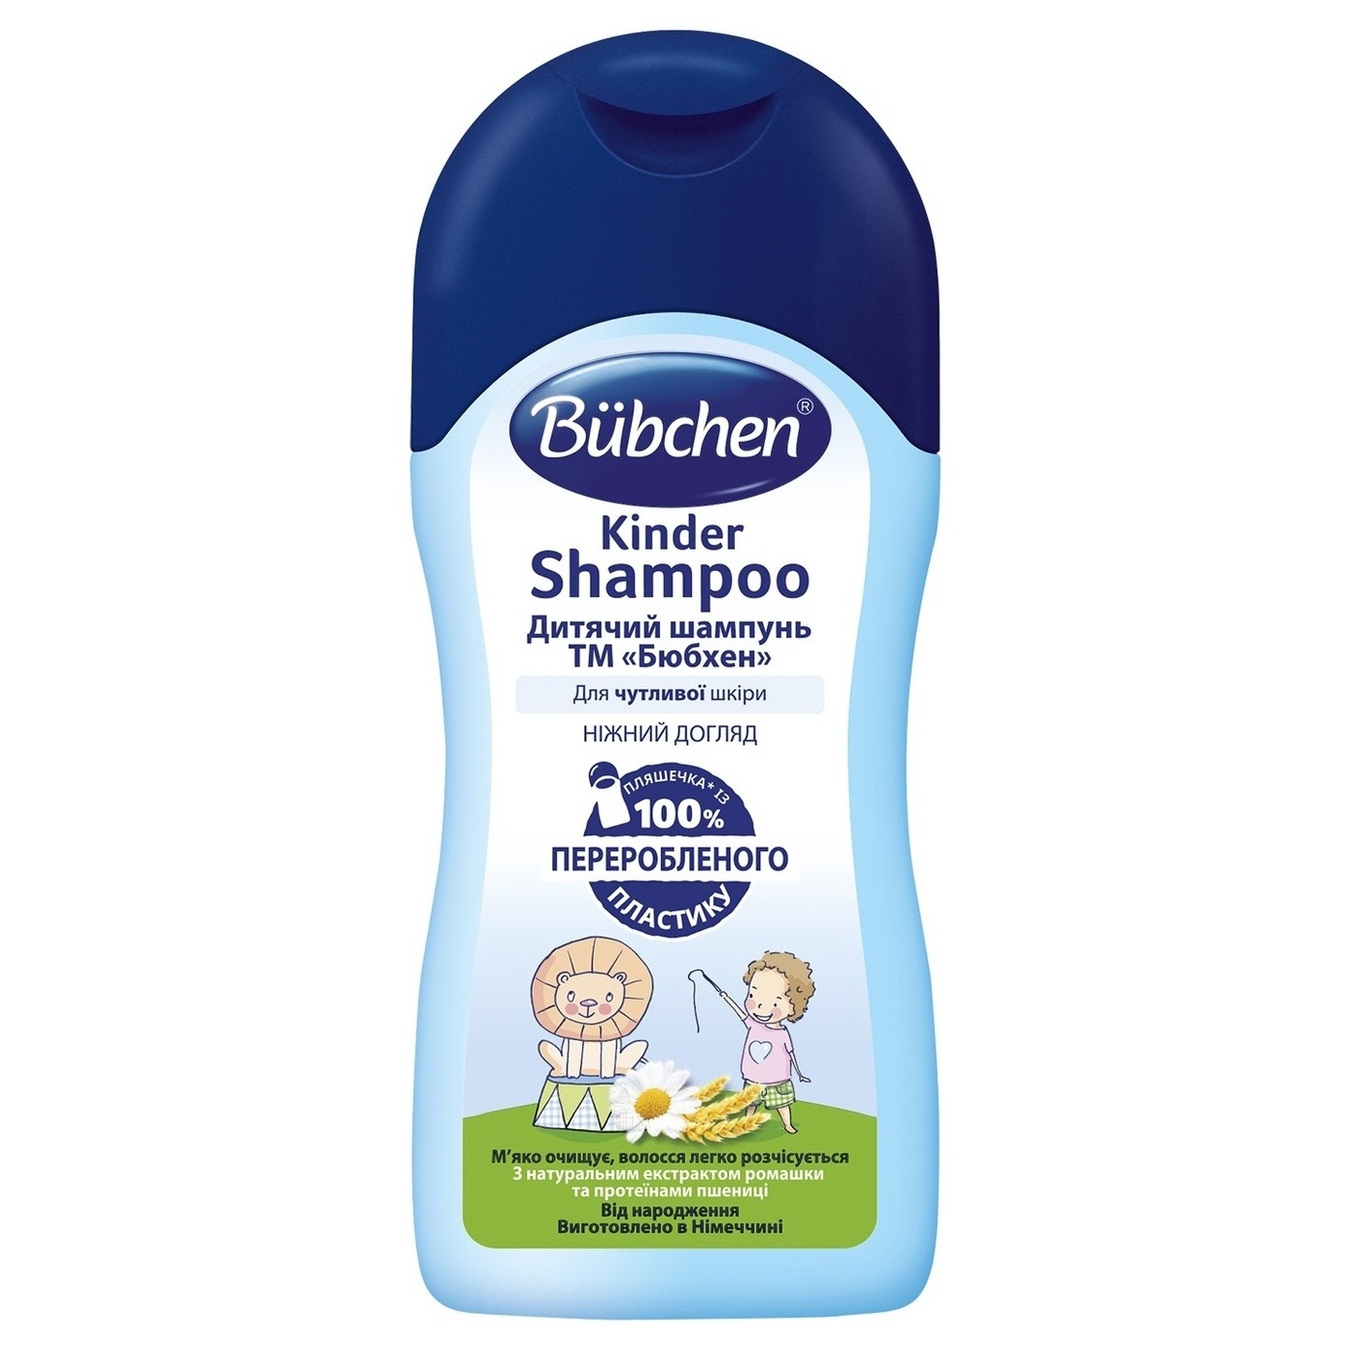 Bubchen shampoo for children 200 ml